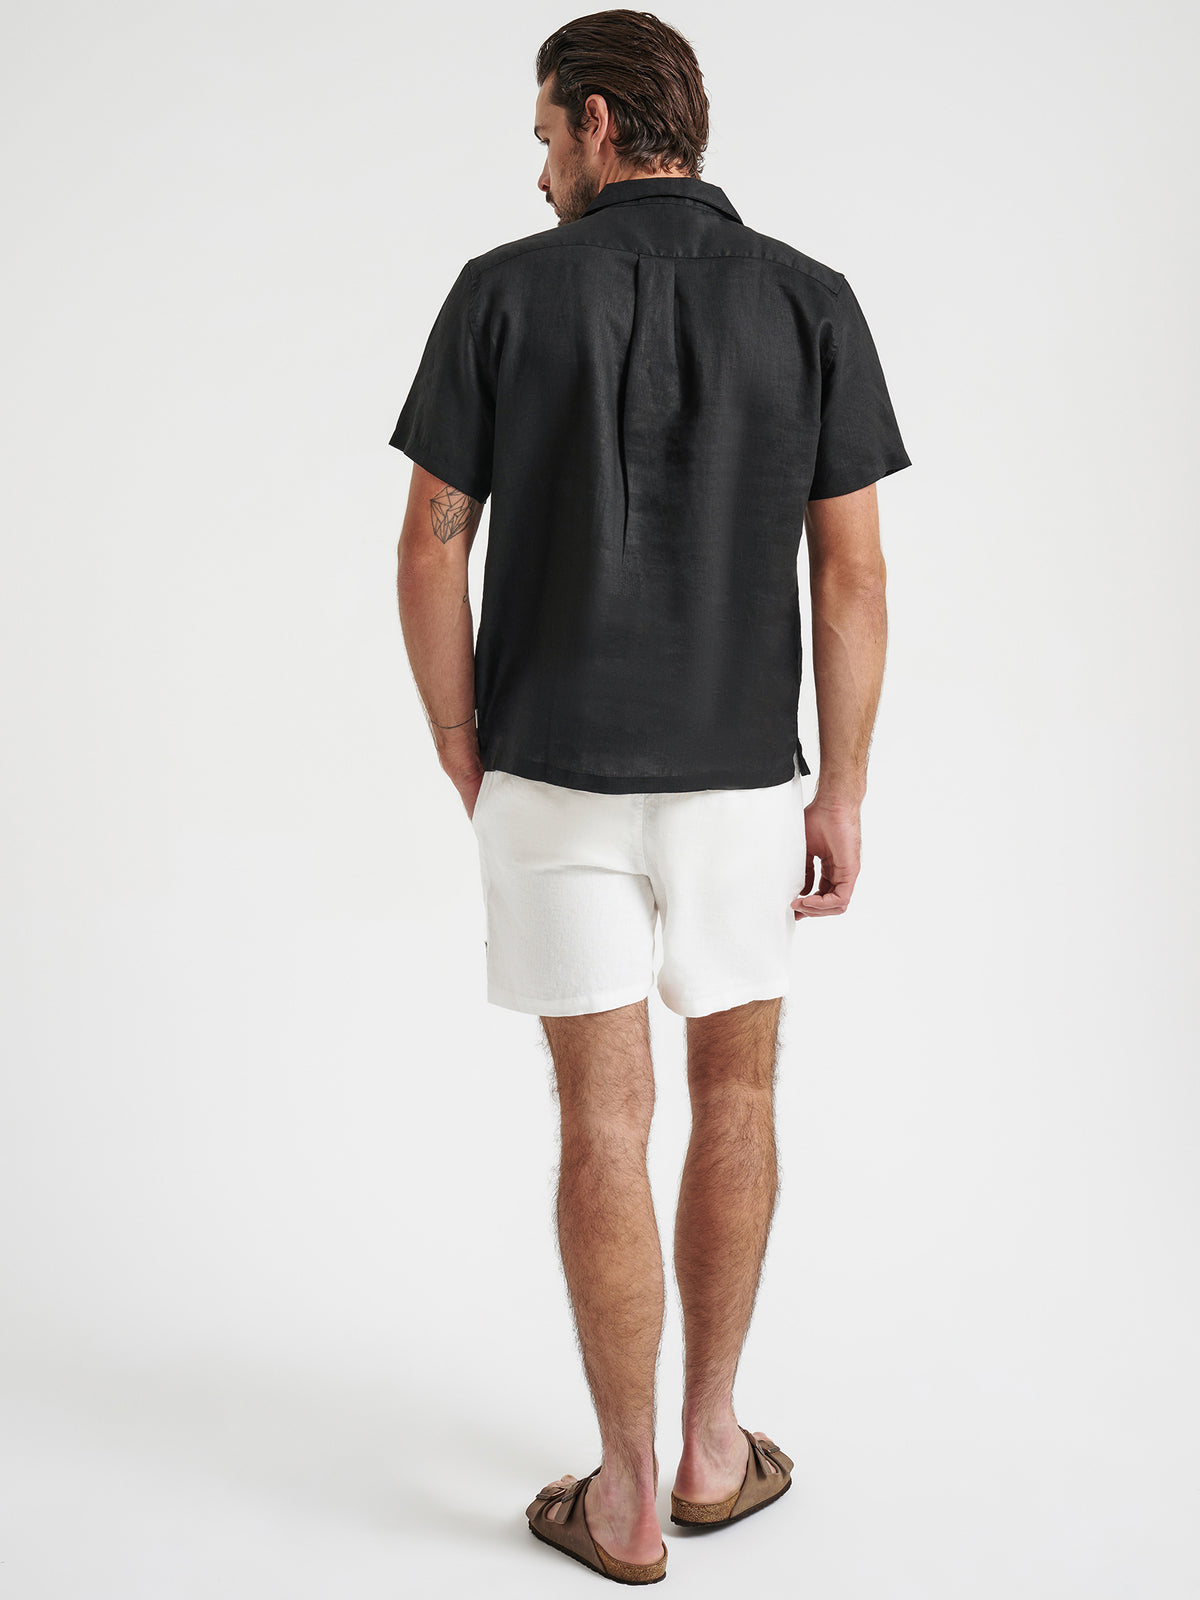 Nero Linen Resort Shirt in Black